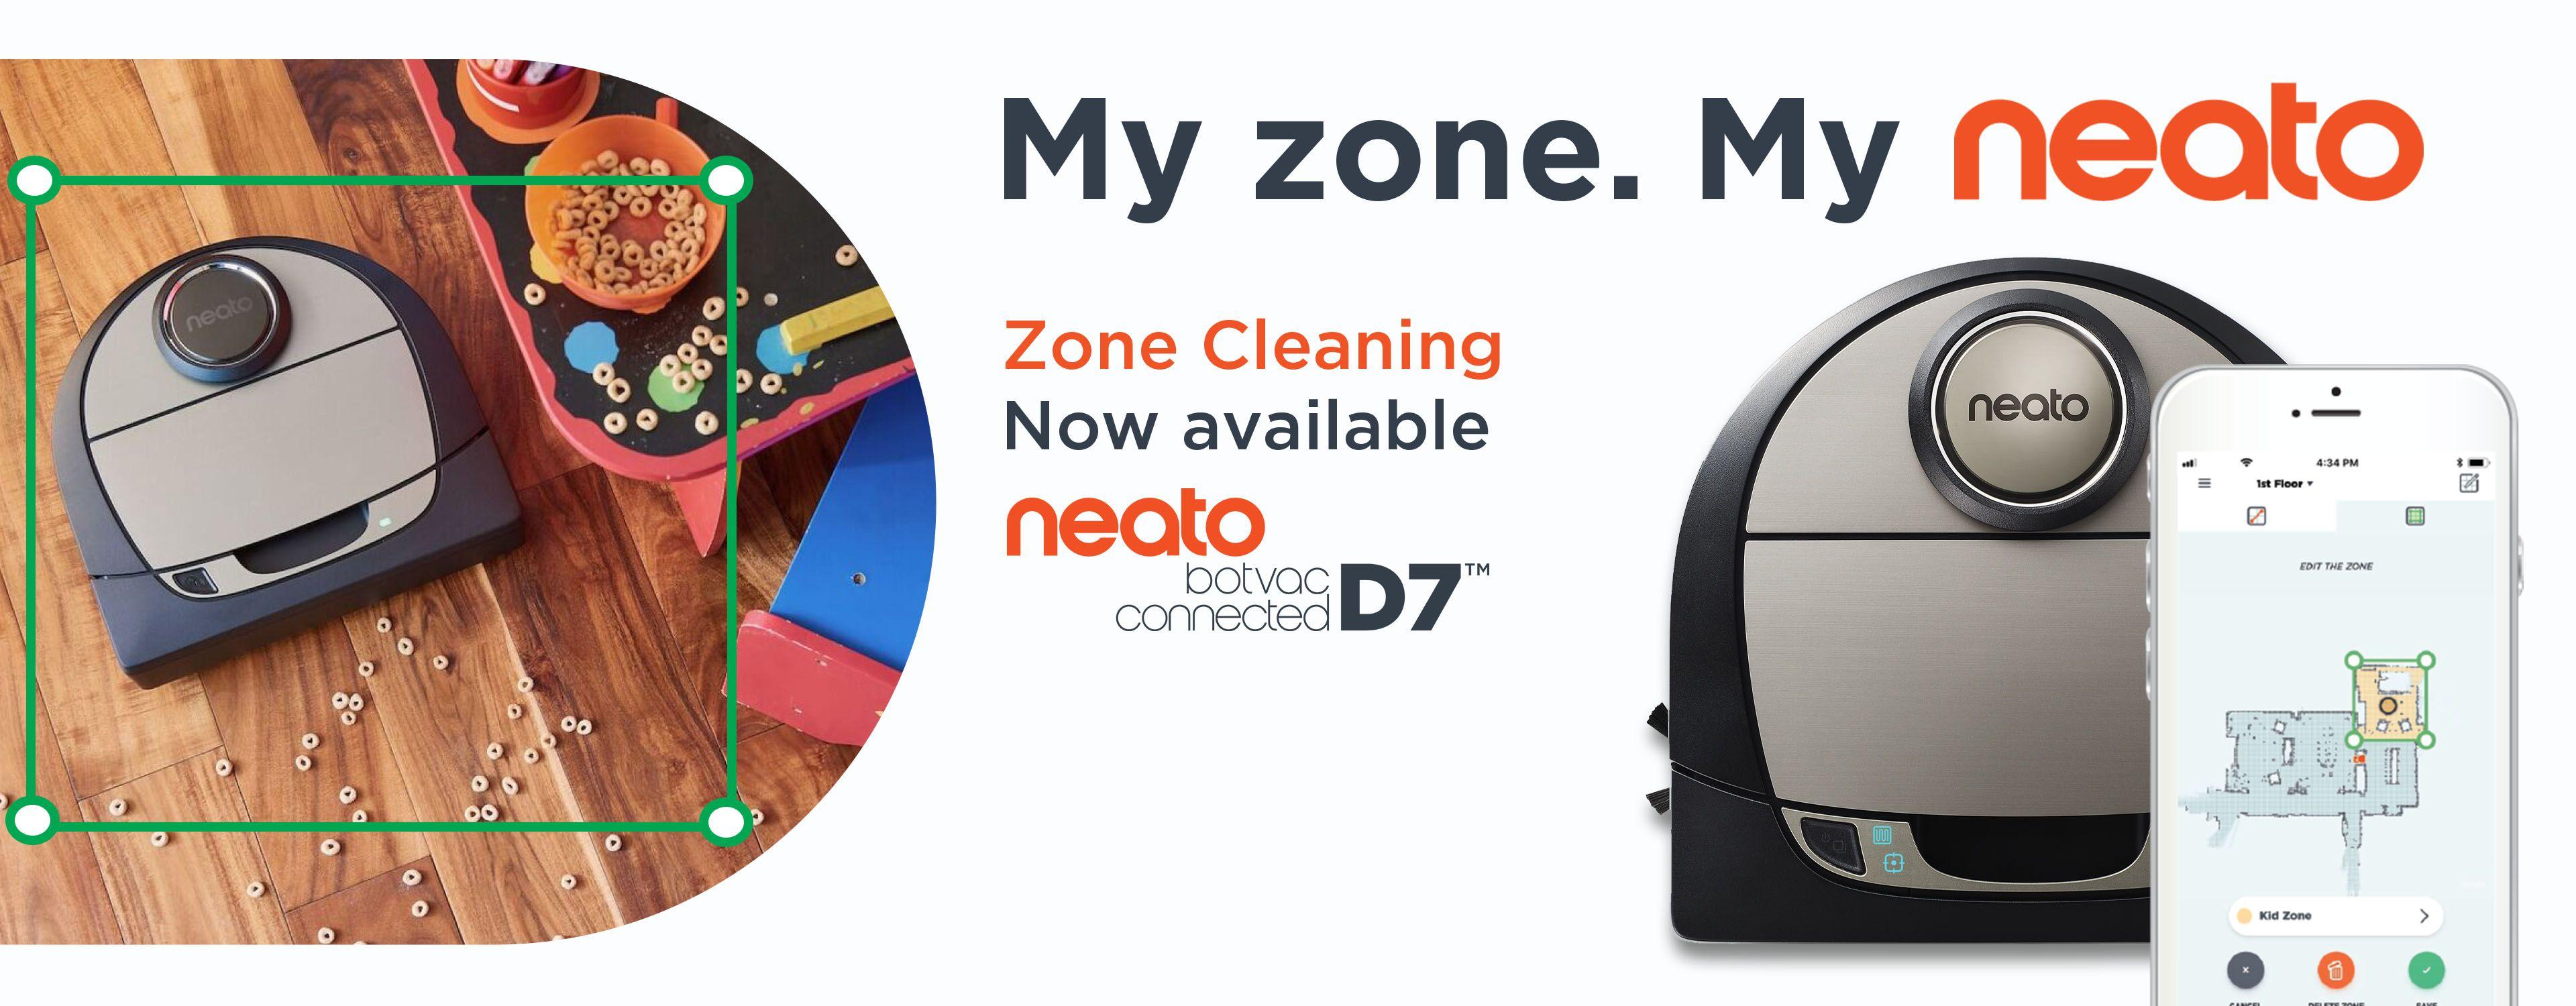 Neato Logo - Neato Robotics | Smart, Powerful, Connected Robot Vacuums